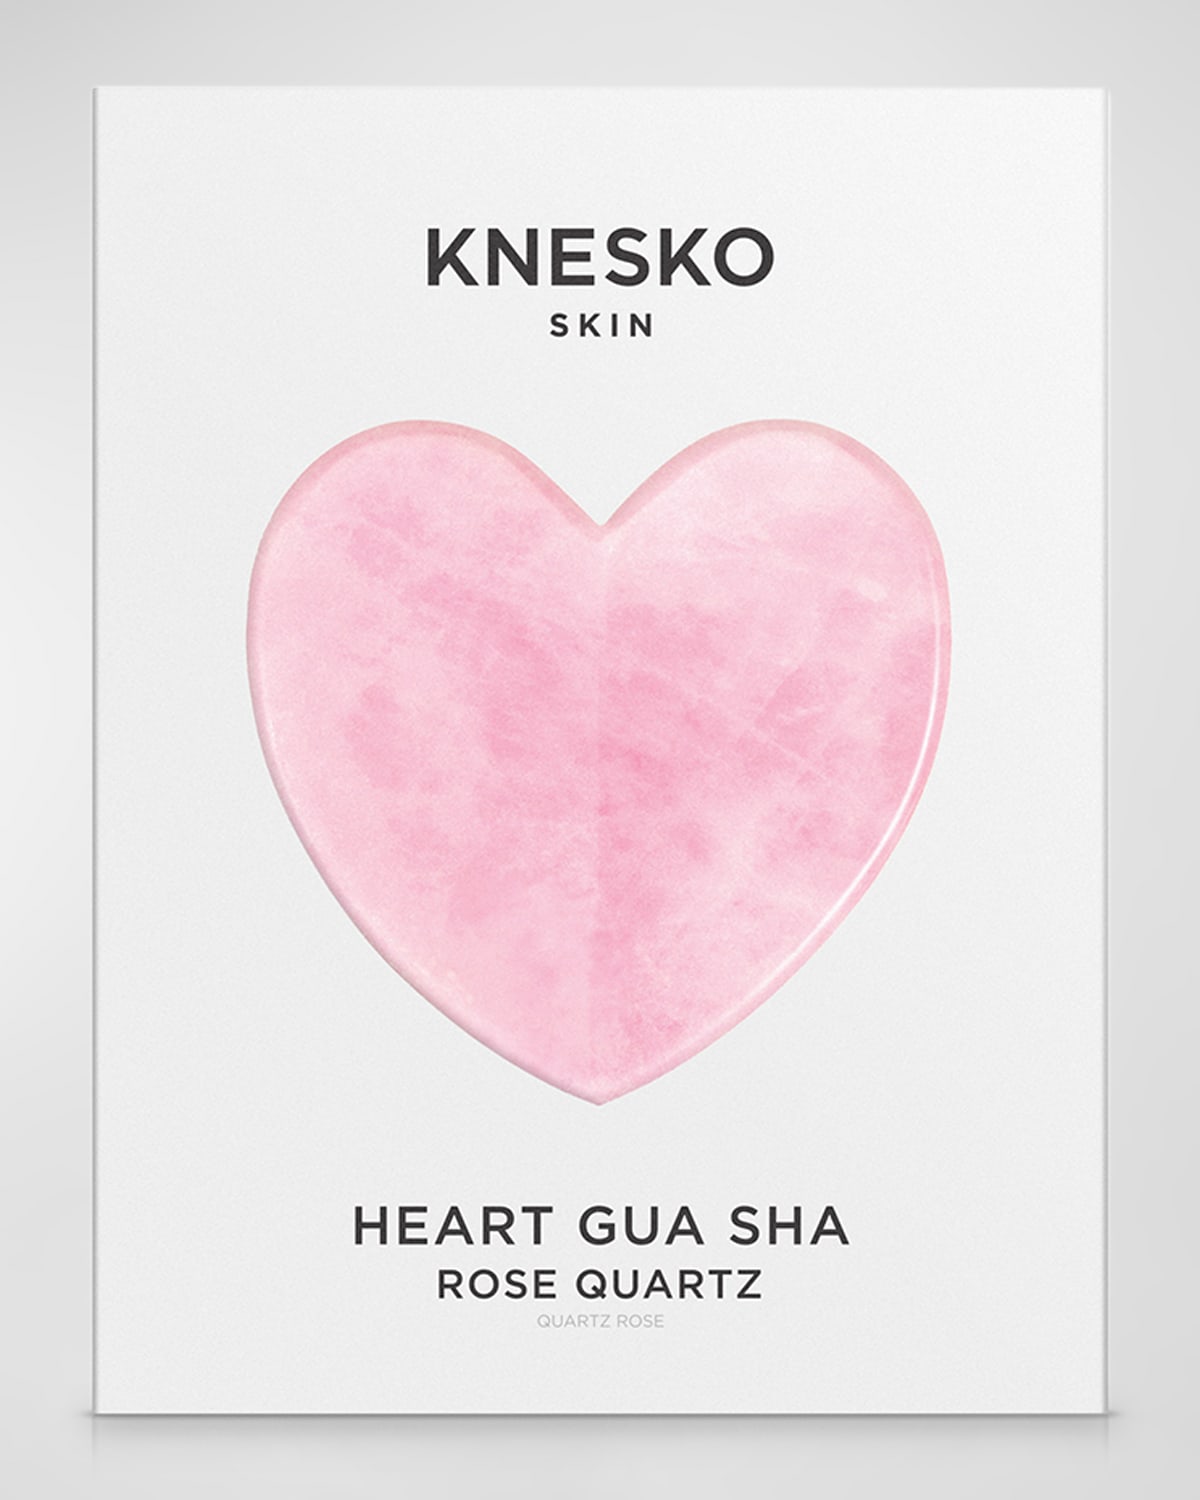 Knesko Skin Rose Quartz Heart Gua Sha ($80 Value)